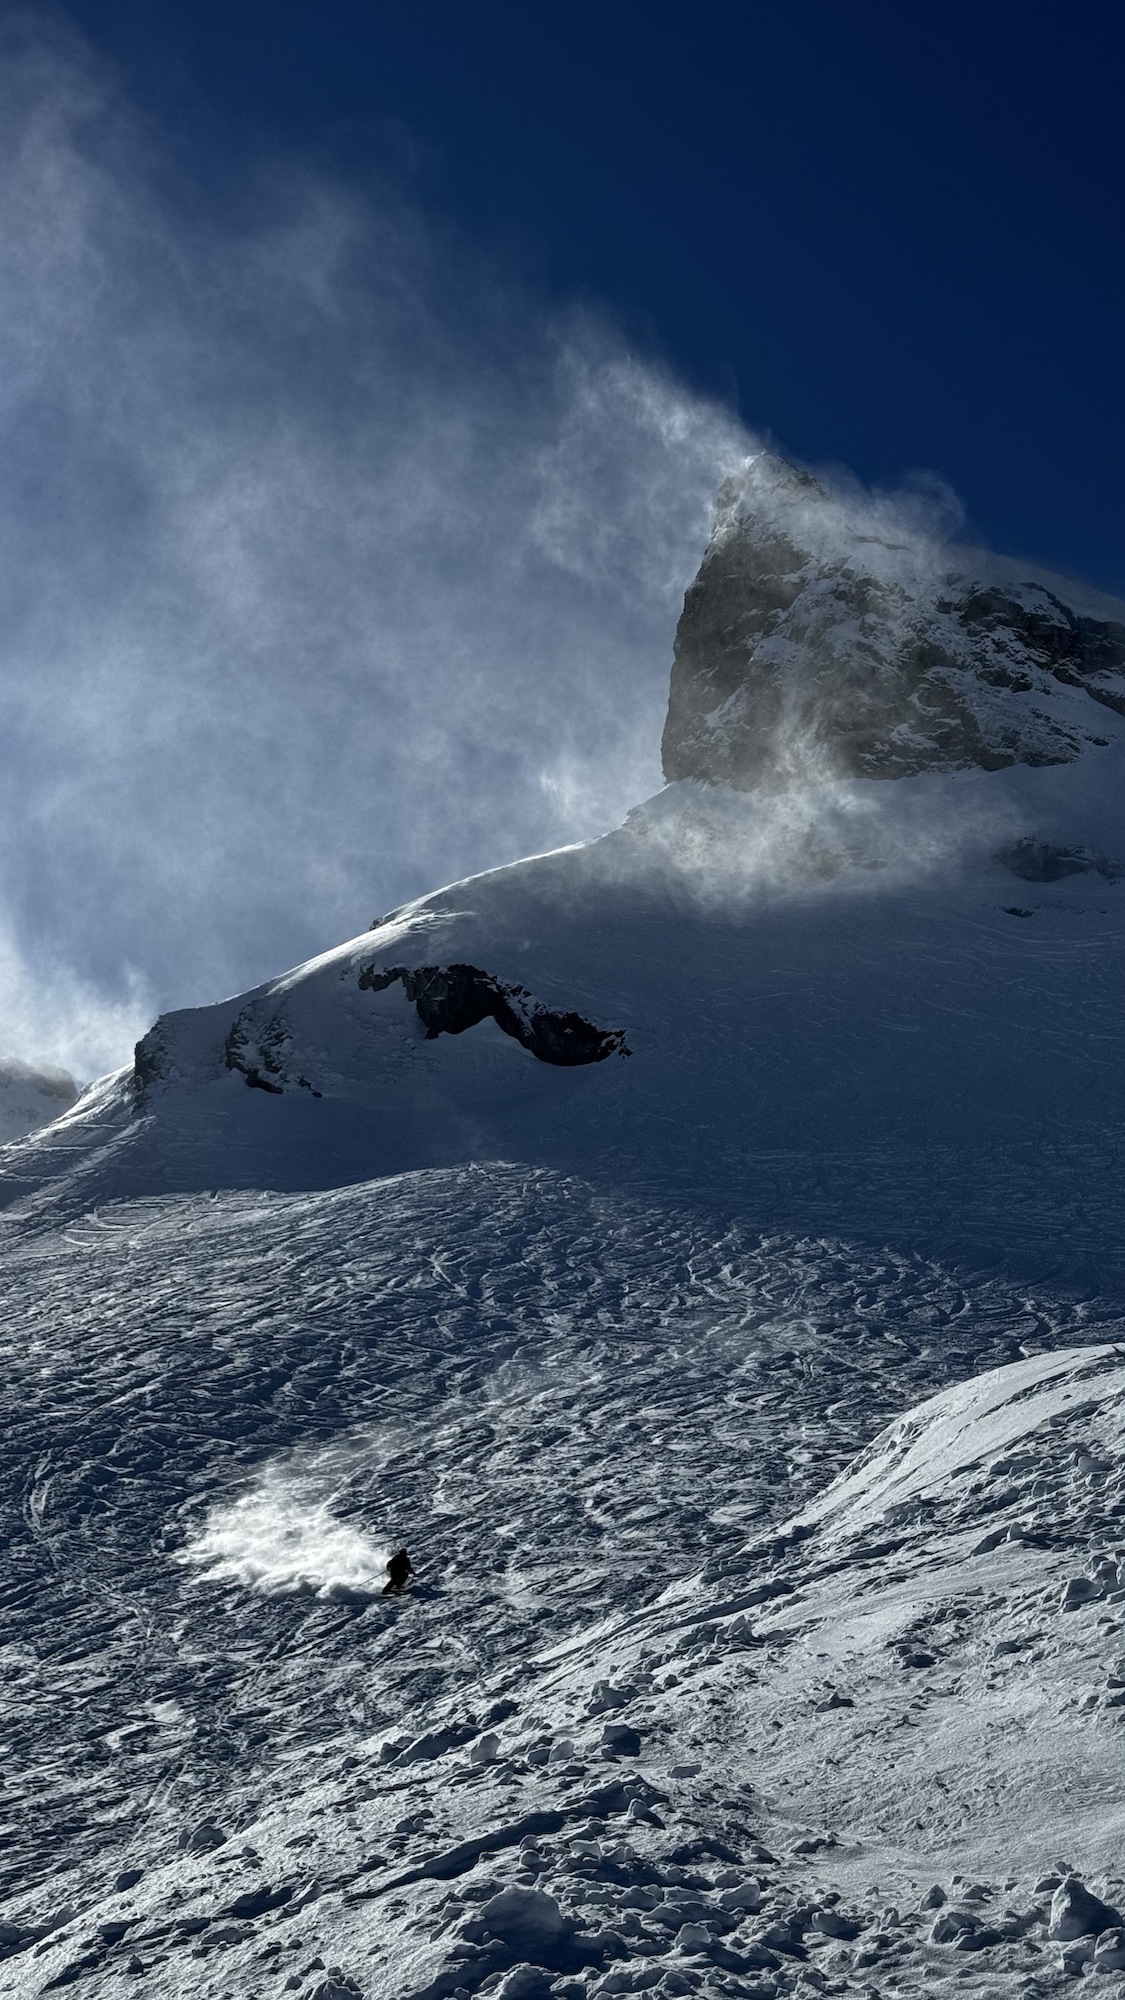 Skier making a turn down a steep snow face.